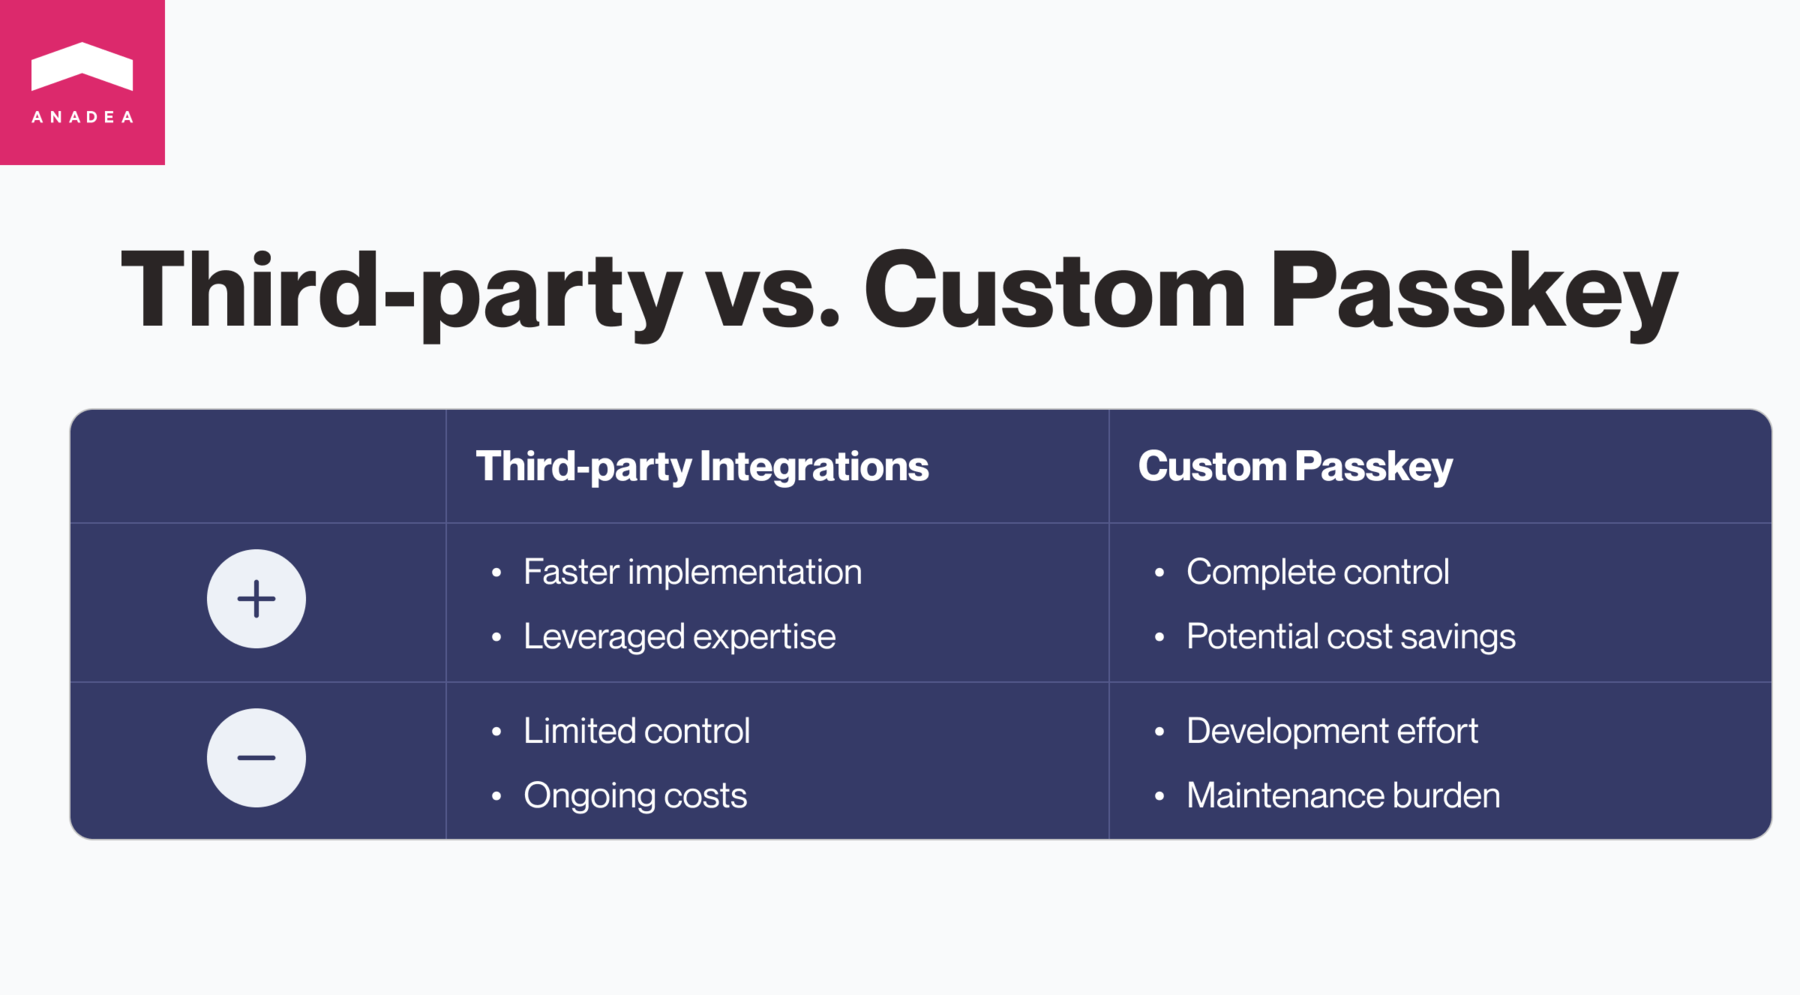 Third-party vs custom passkey comparison